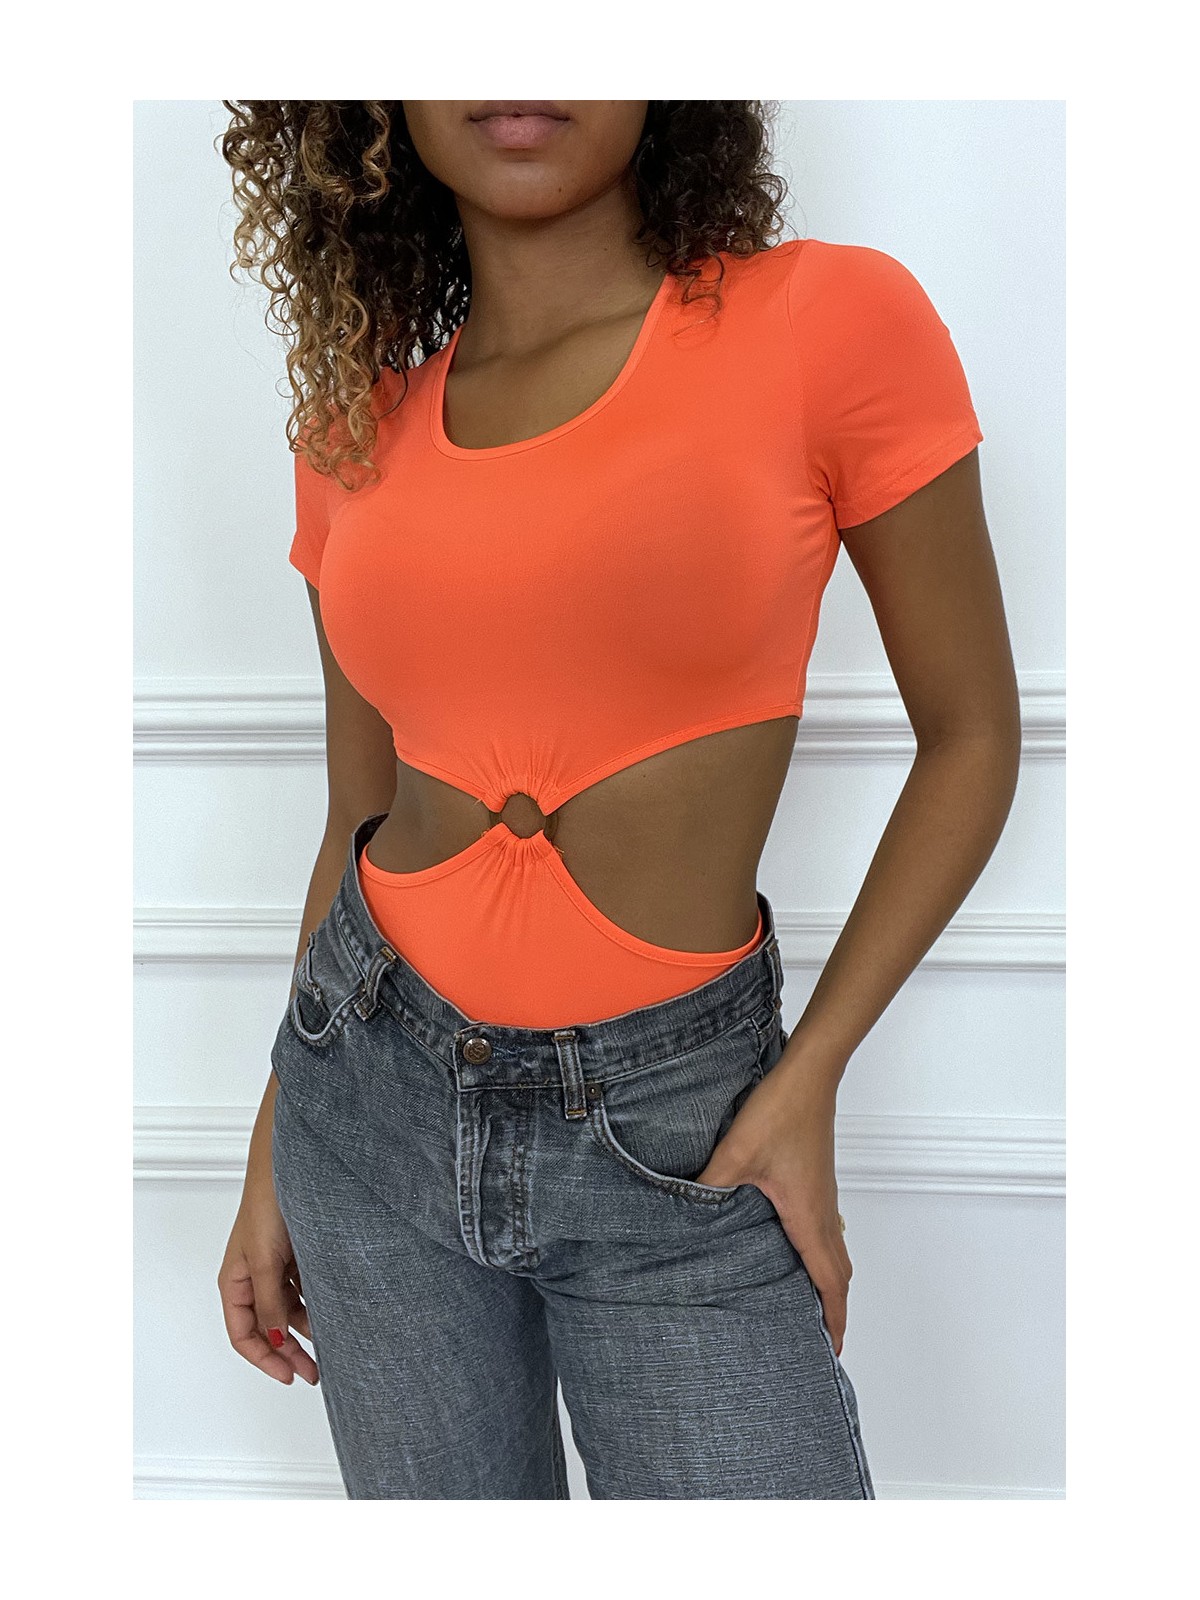 Body orange tee shirt facon trikini avec anneaux - 1